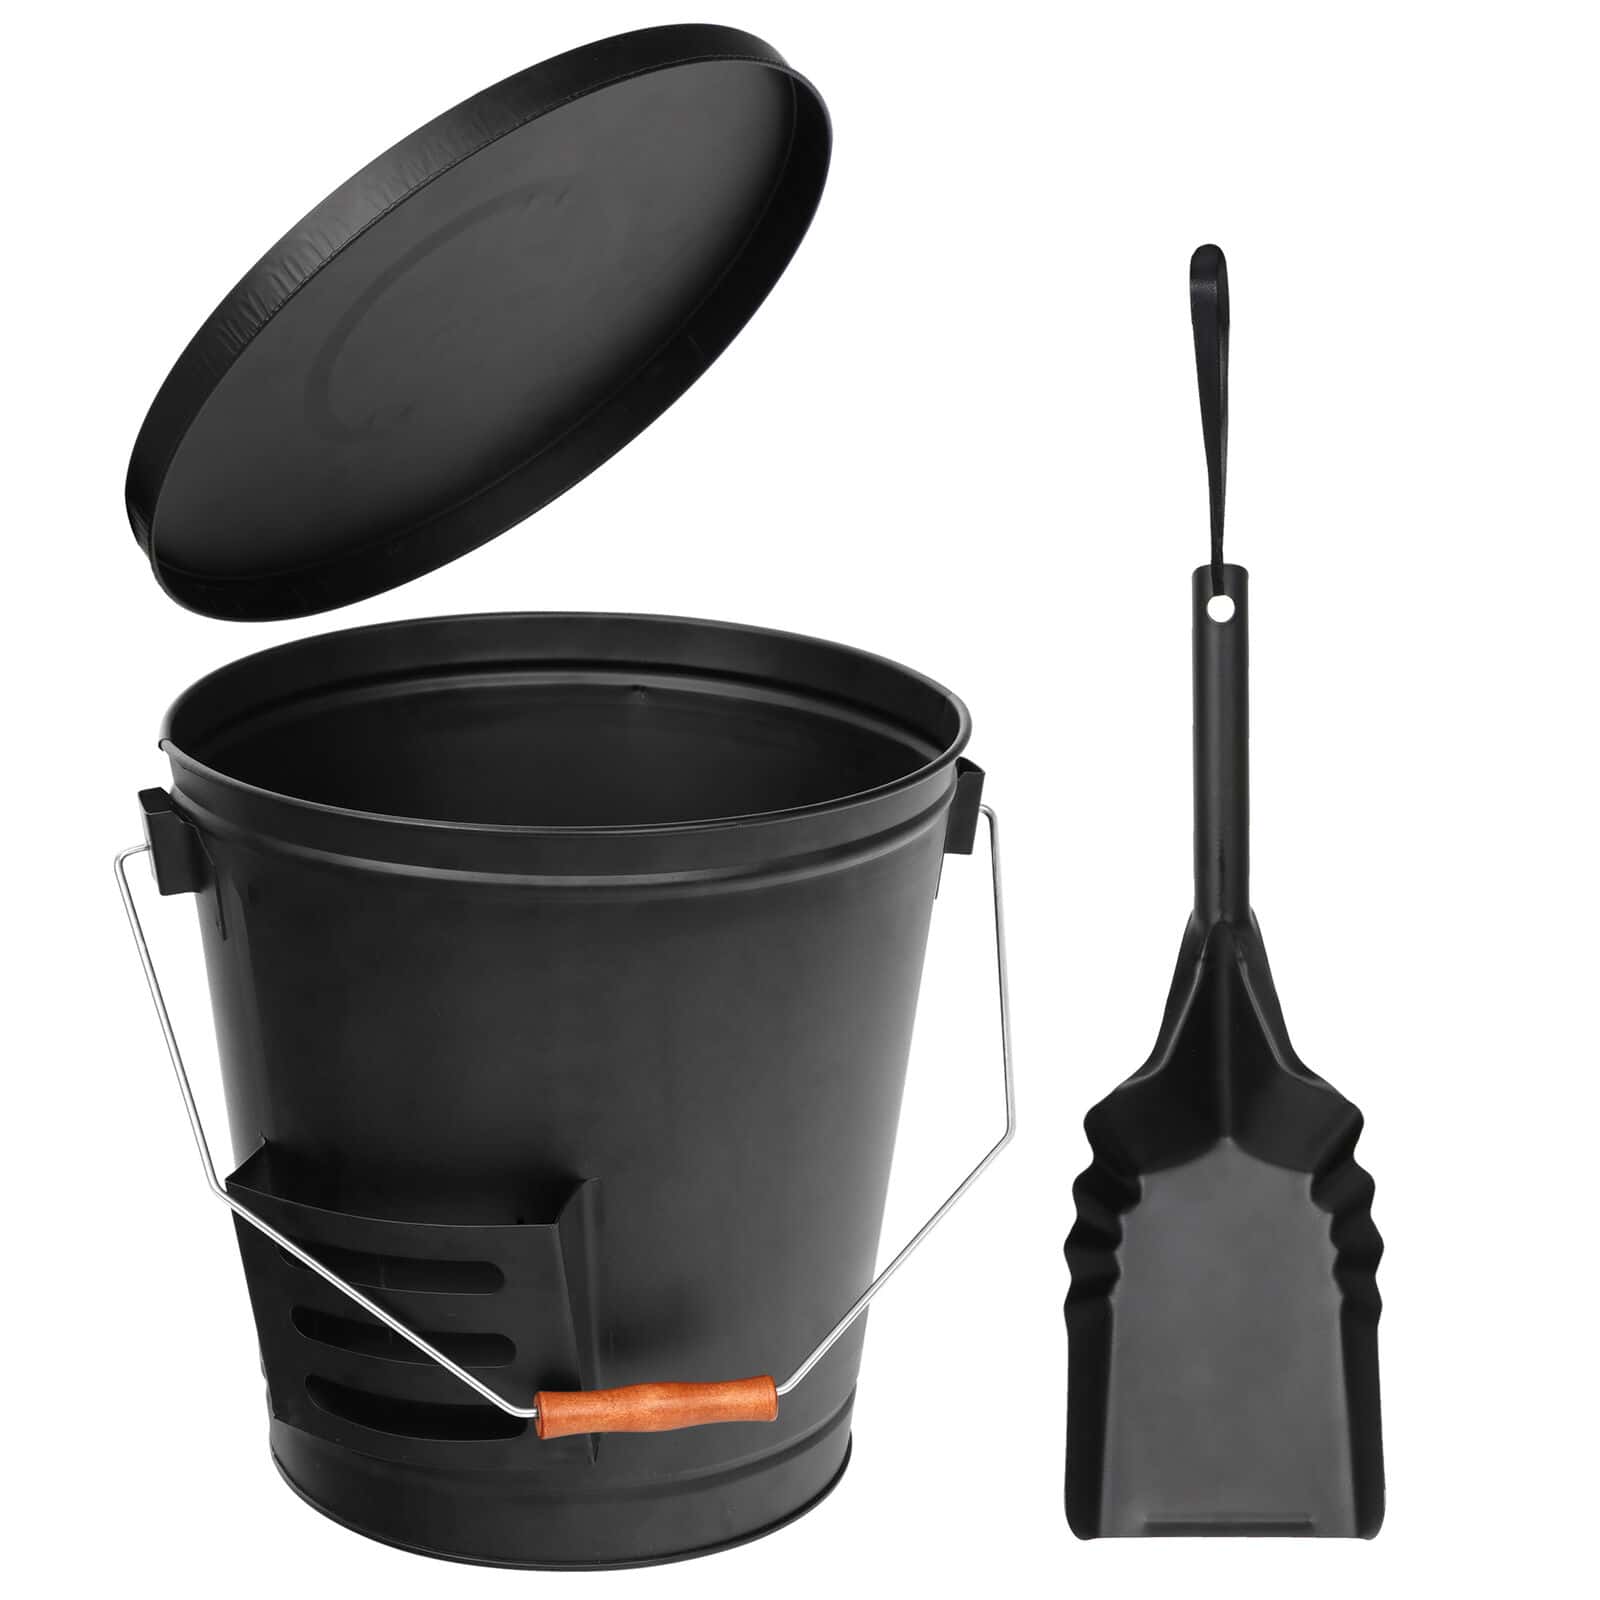 A black bucket with a shovel and a shovel.